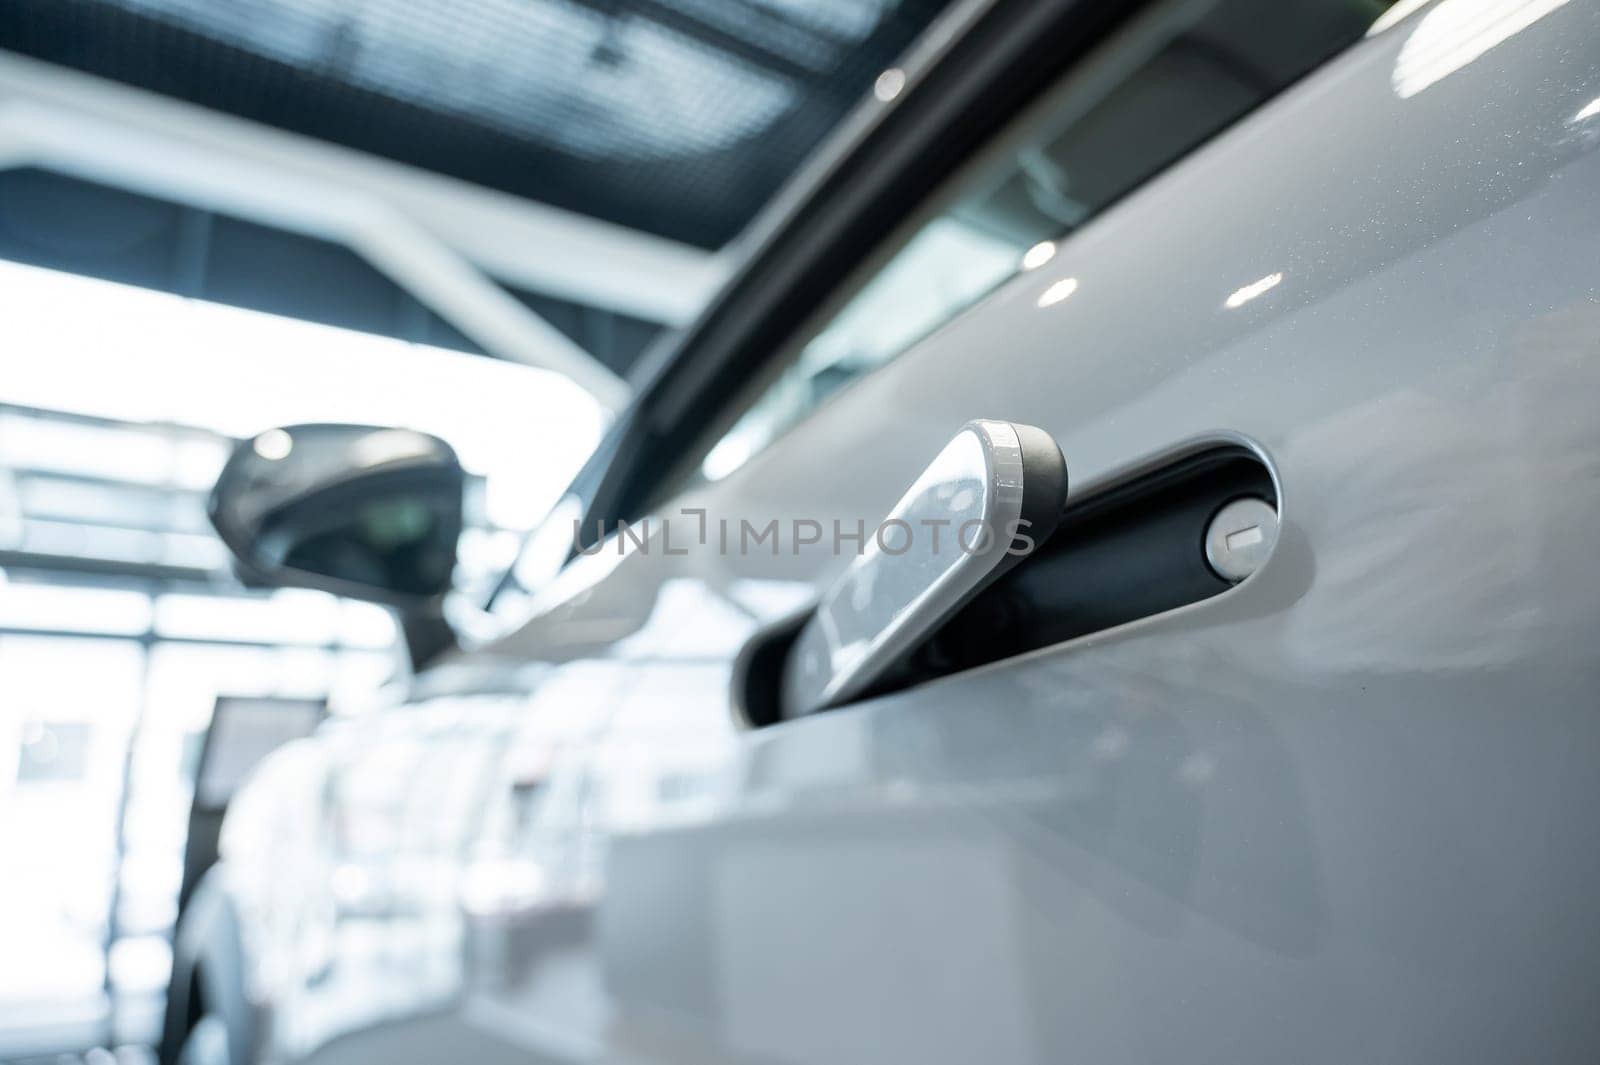 Close-up of an integrated handle in a car door. Fingerprint lock